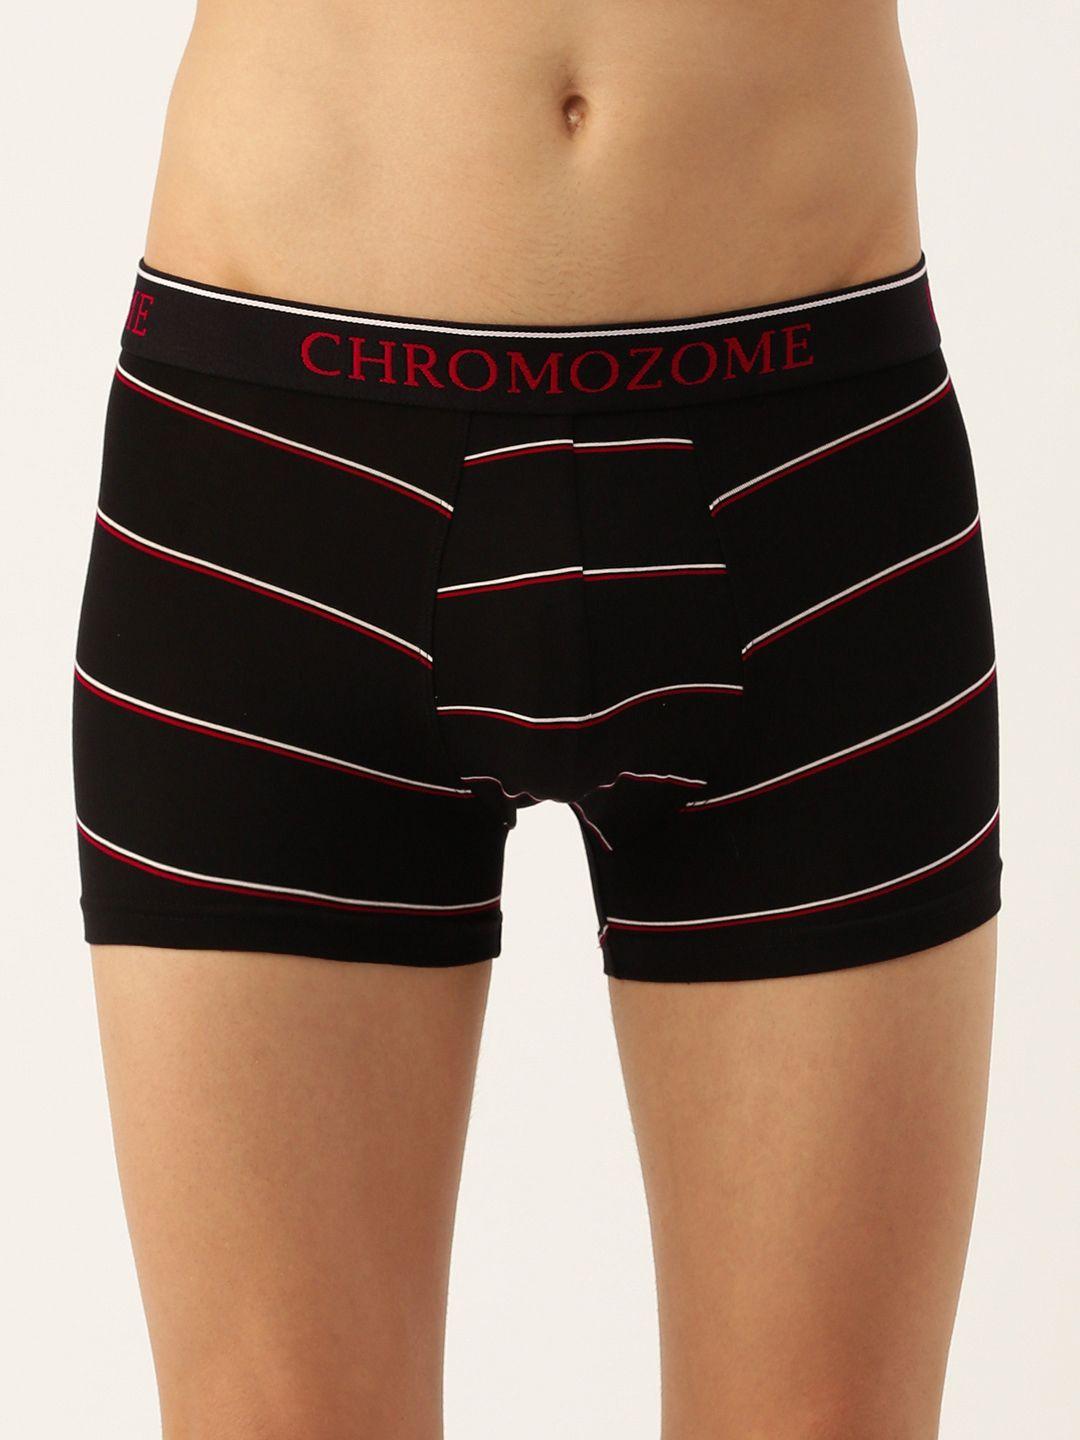 chromozome men ultra-premium micro-modal striped trunk 8902733643184